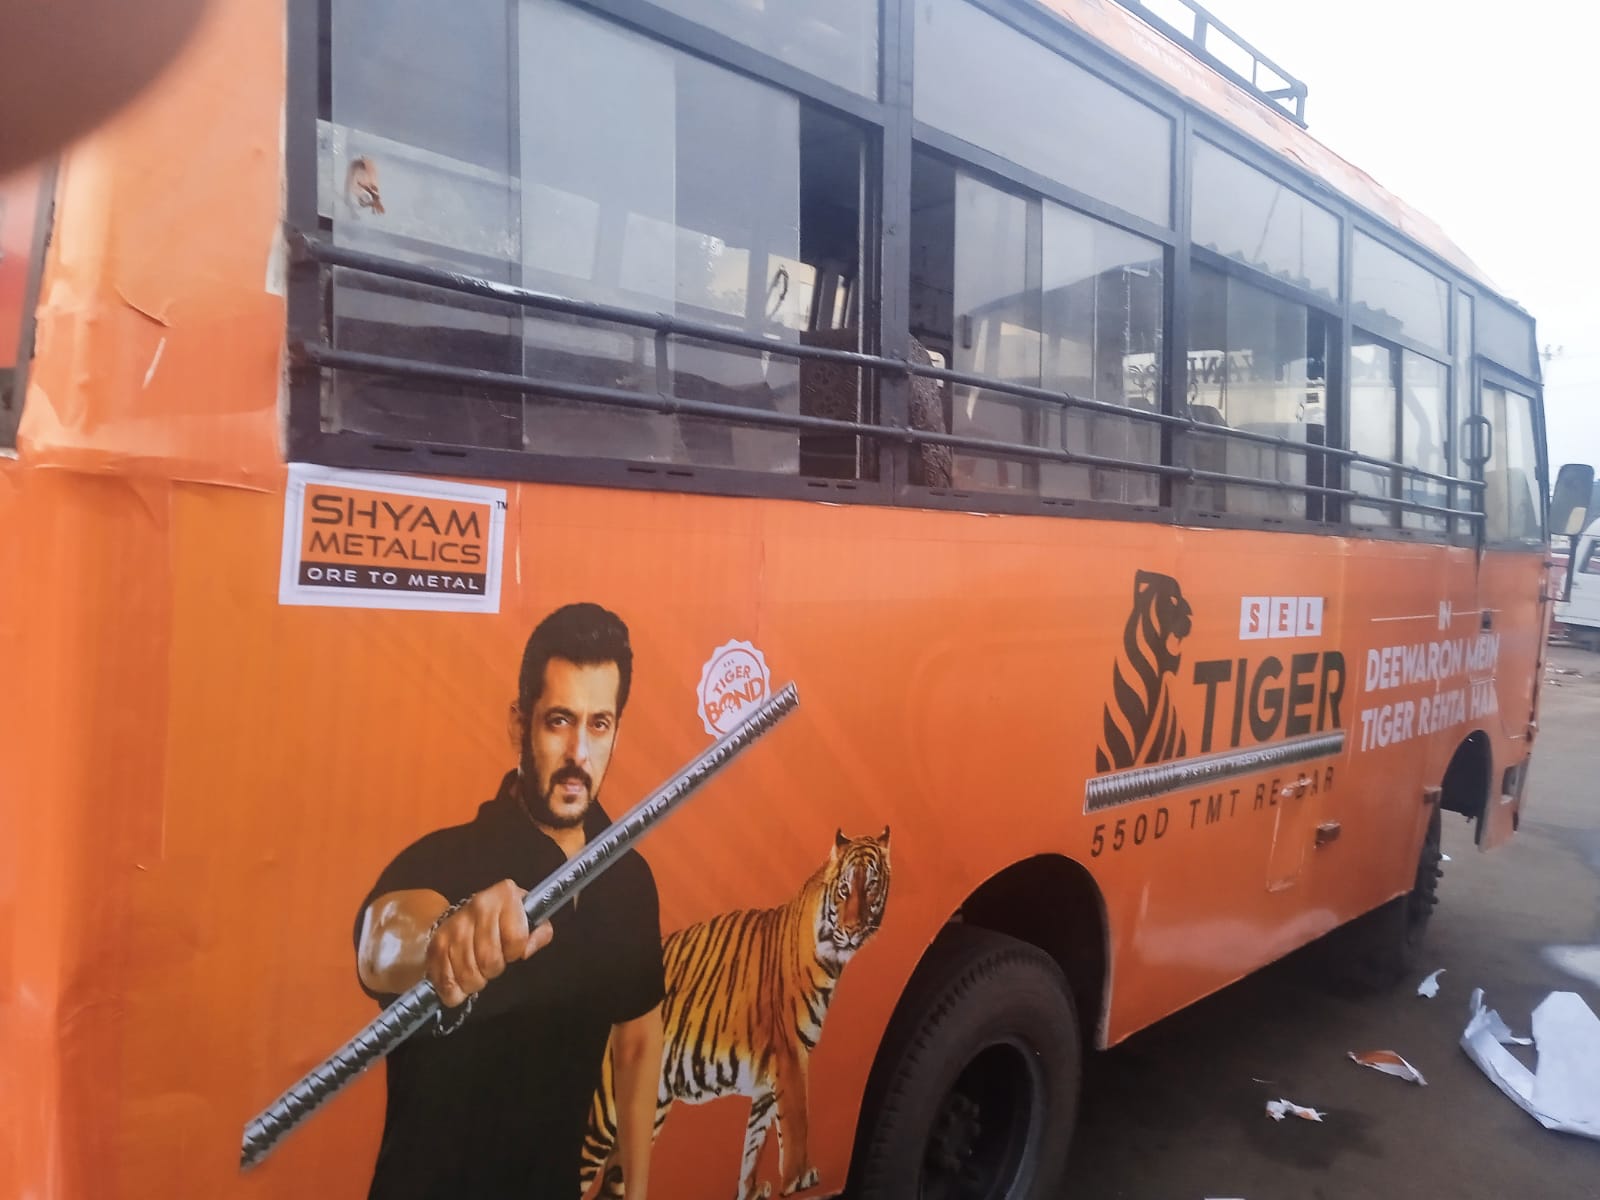 sel tiger TMT bar bus branding